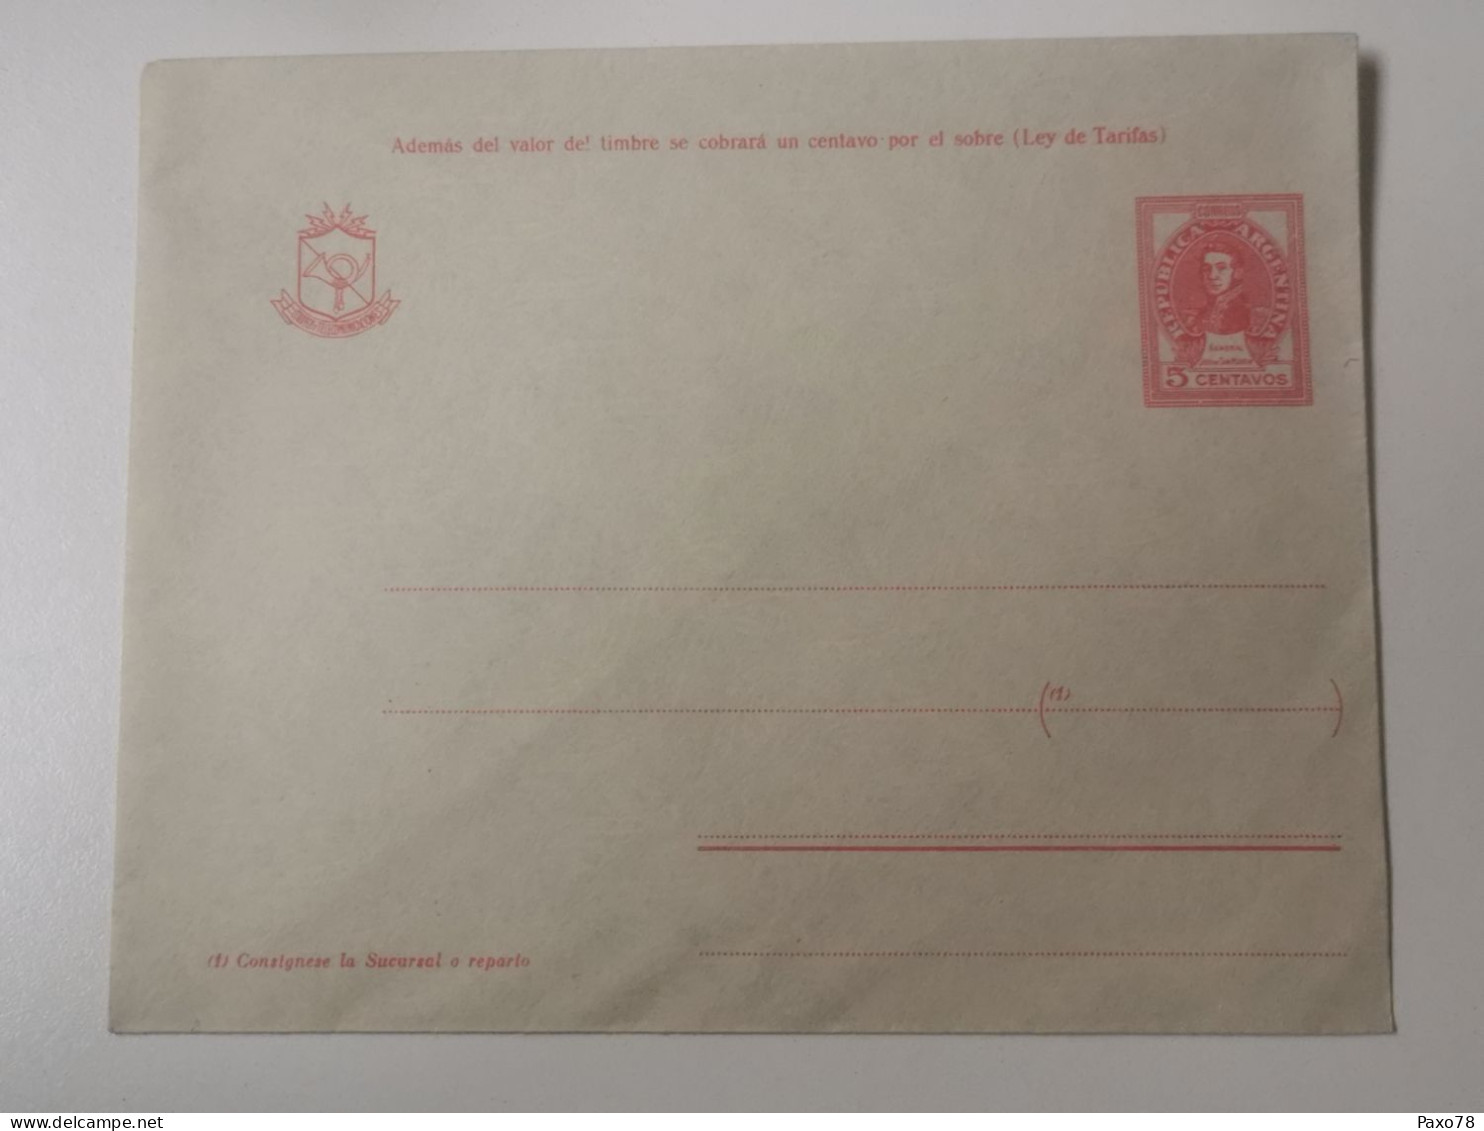 Enveloppe Vierge, Argentina 5 Centavos - Postal Stationery